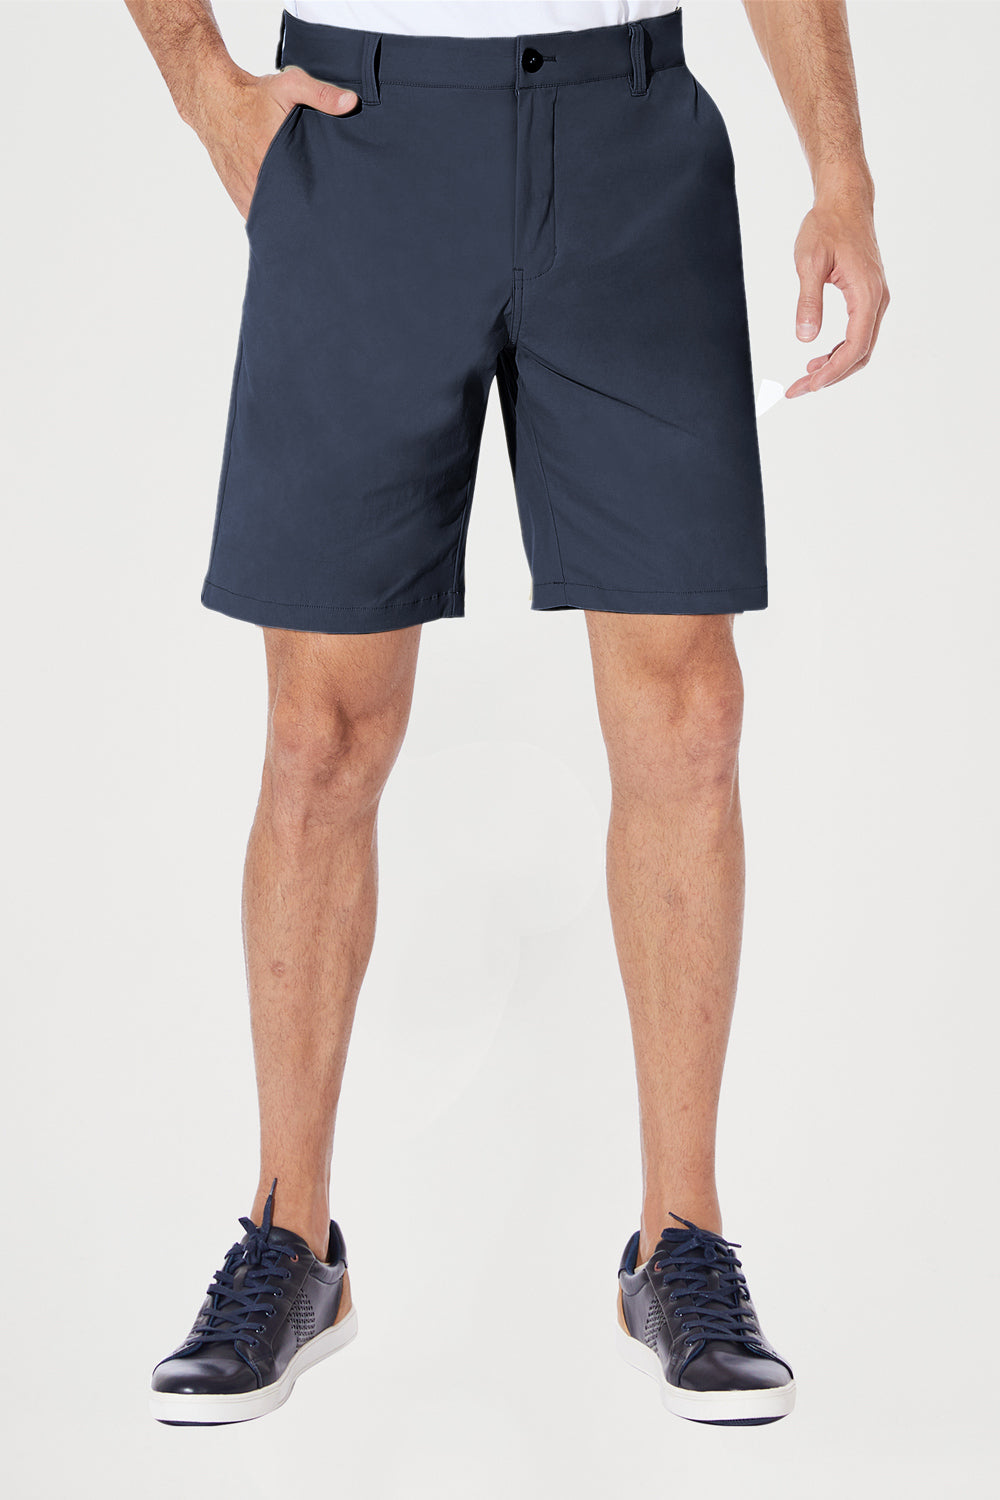 PULI Men's Golf Hybrid Dress Shorts Casual Chino Stretch Flat